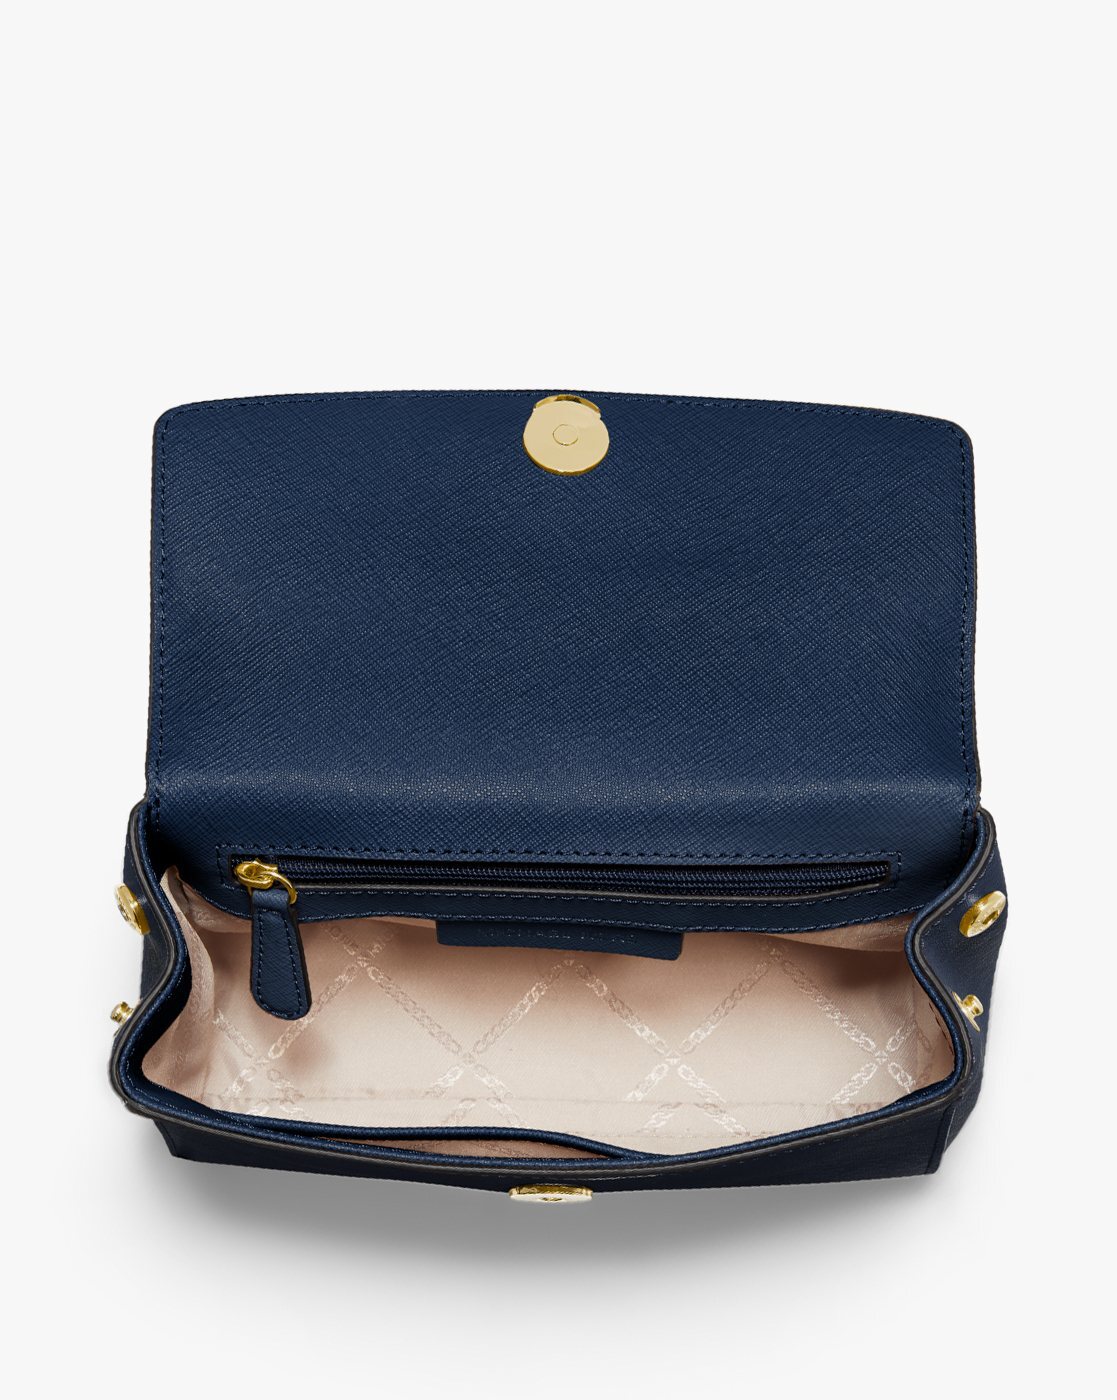 NWT Michael Kors Ava Extra Small Saffiano Leather Crossbody Bag